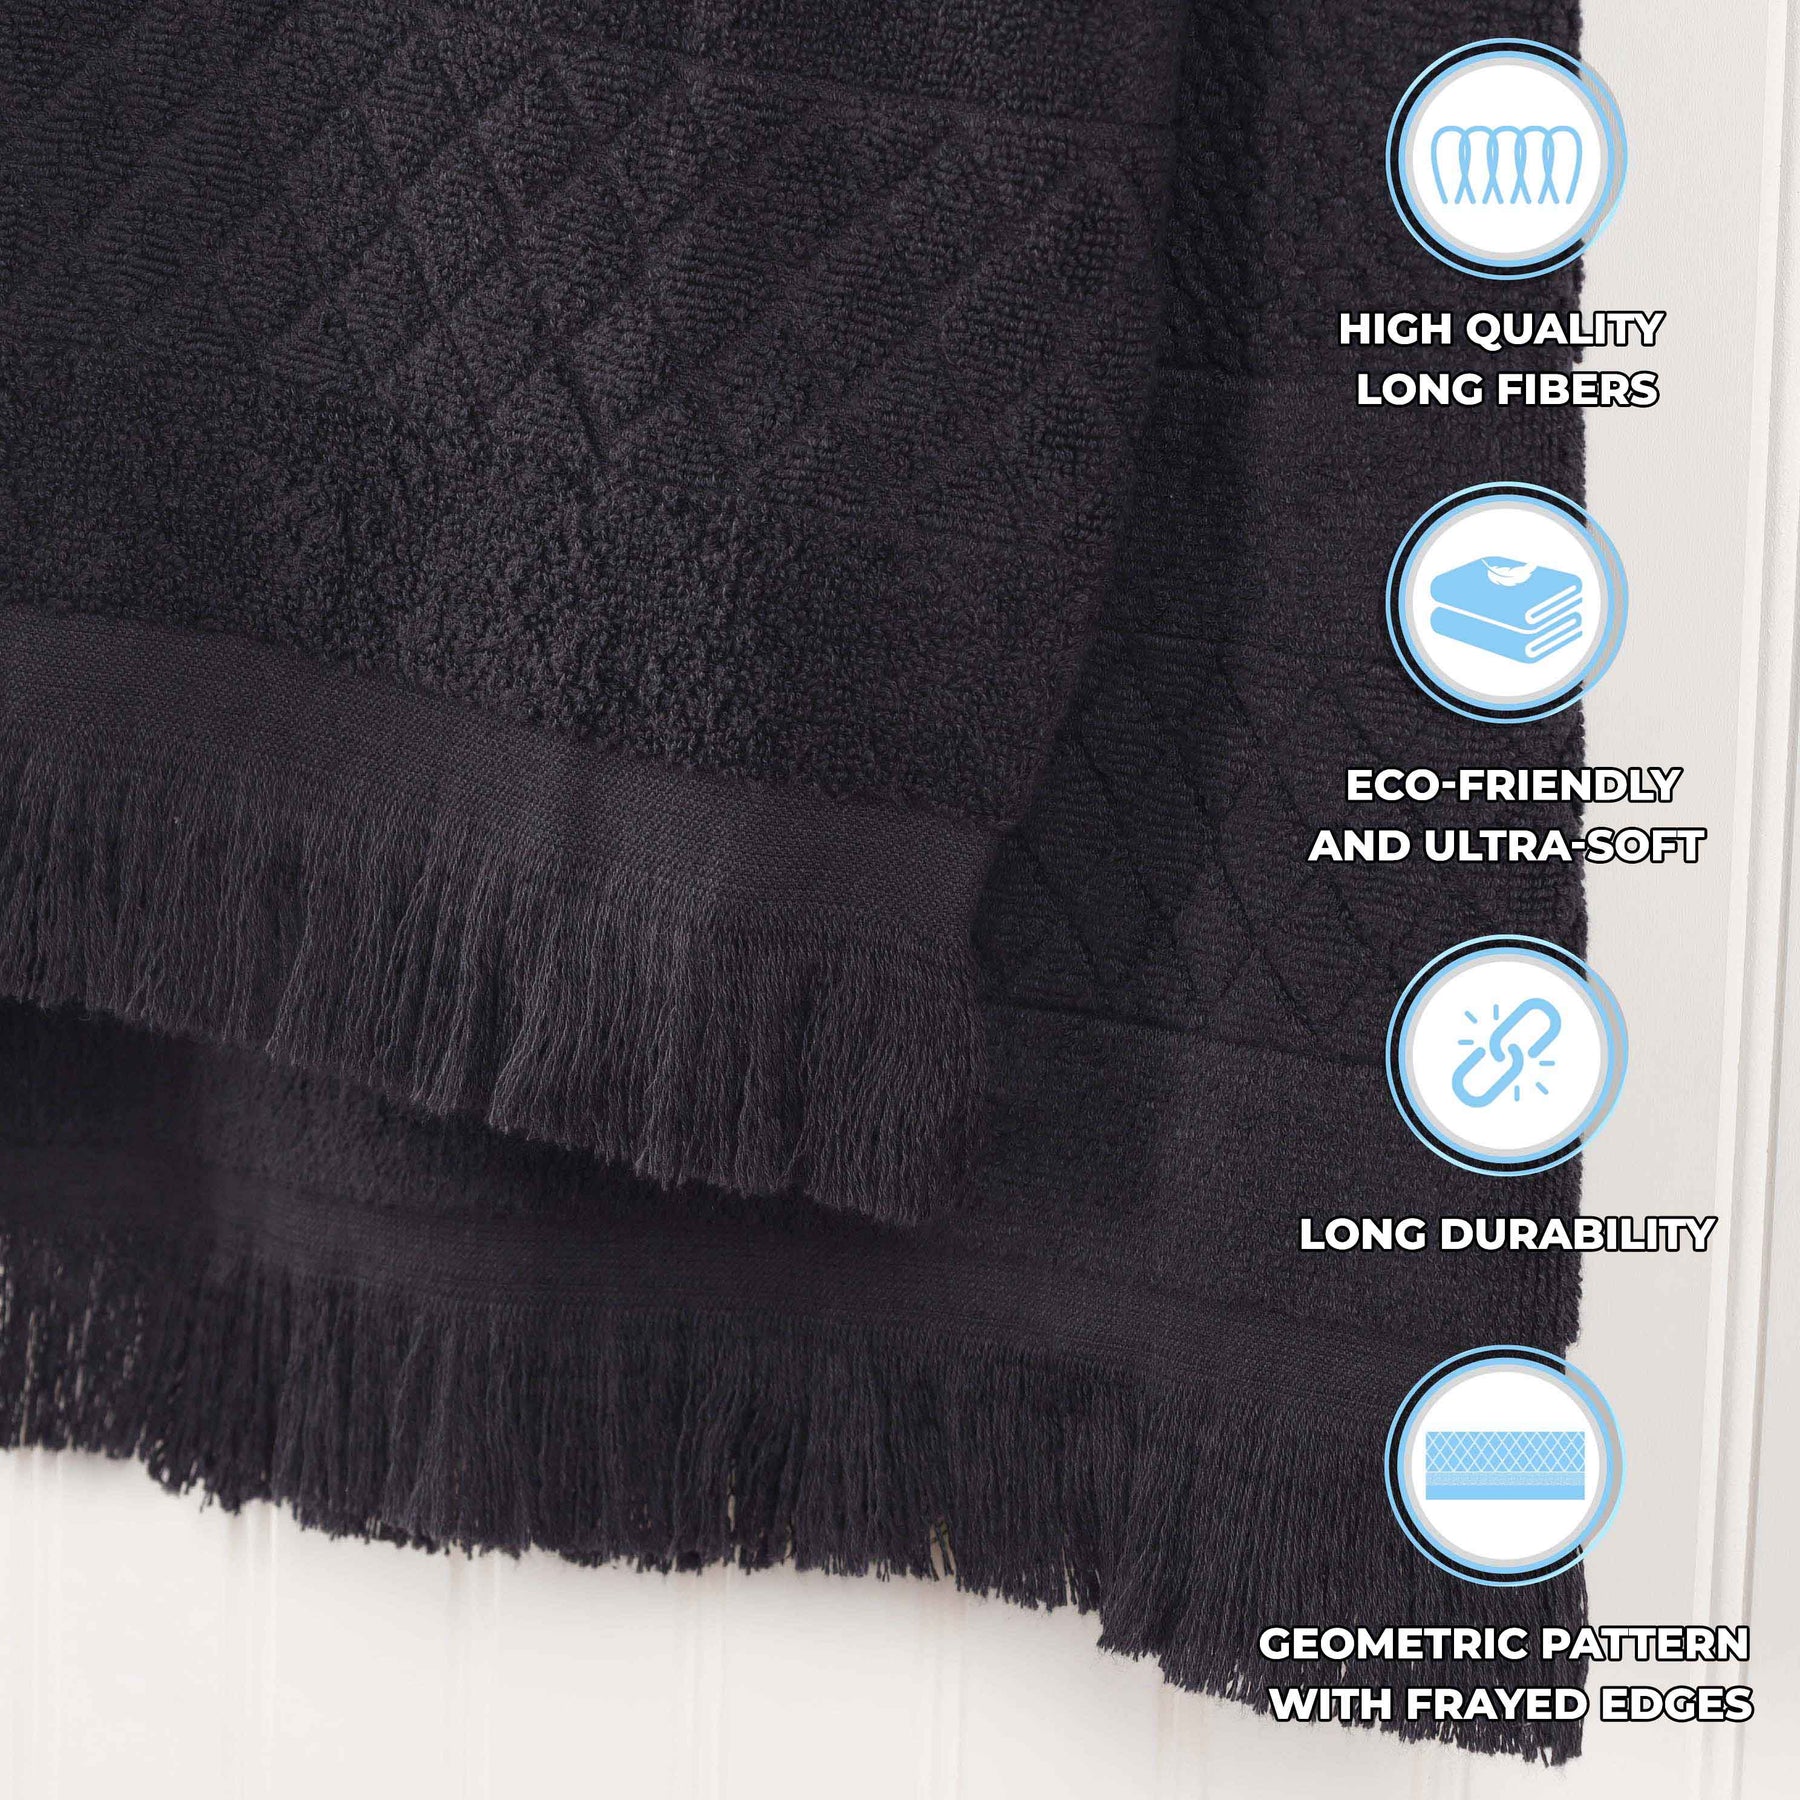 Rolla Cotton Geometric Jacquard Plush Face Towel Washcloth - Black